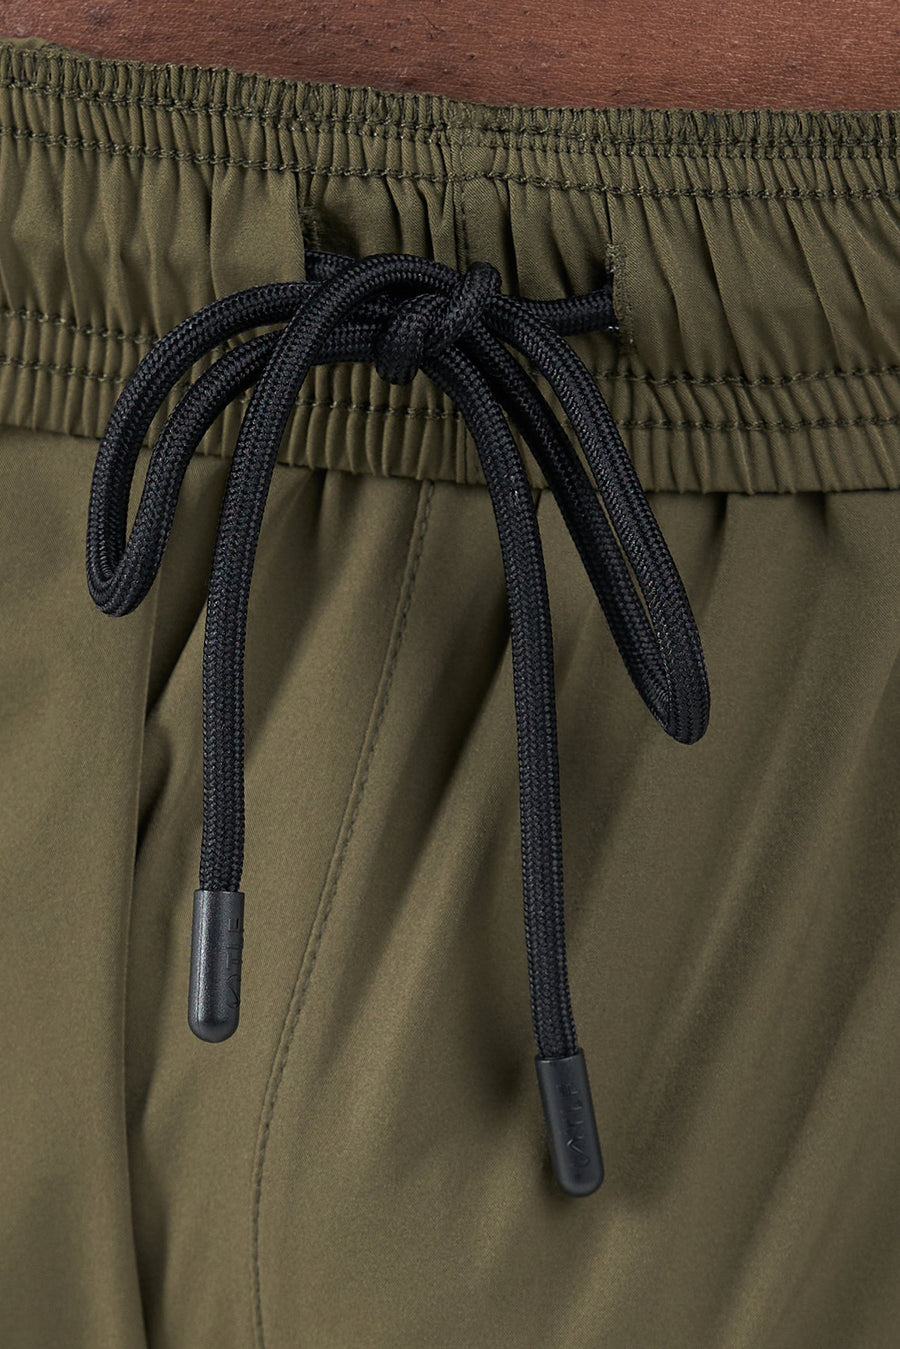 TLF Element 5” Shorts - Men’s 5 Inch inseam Shorts – Army Green - 5